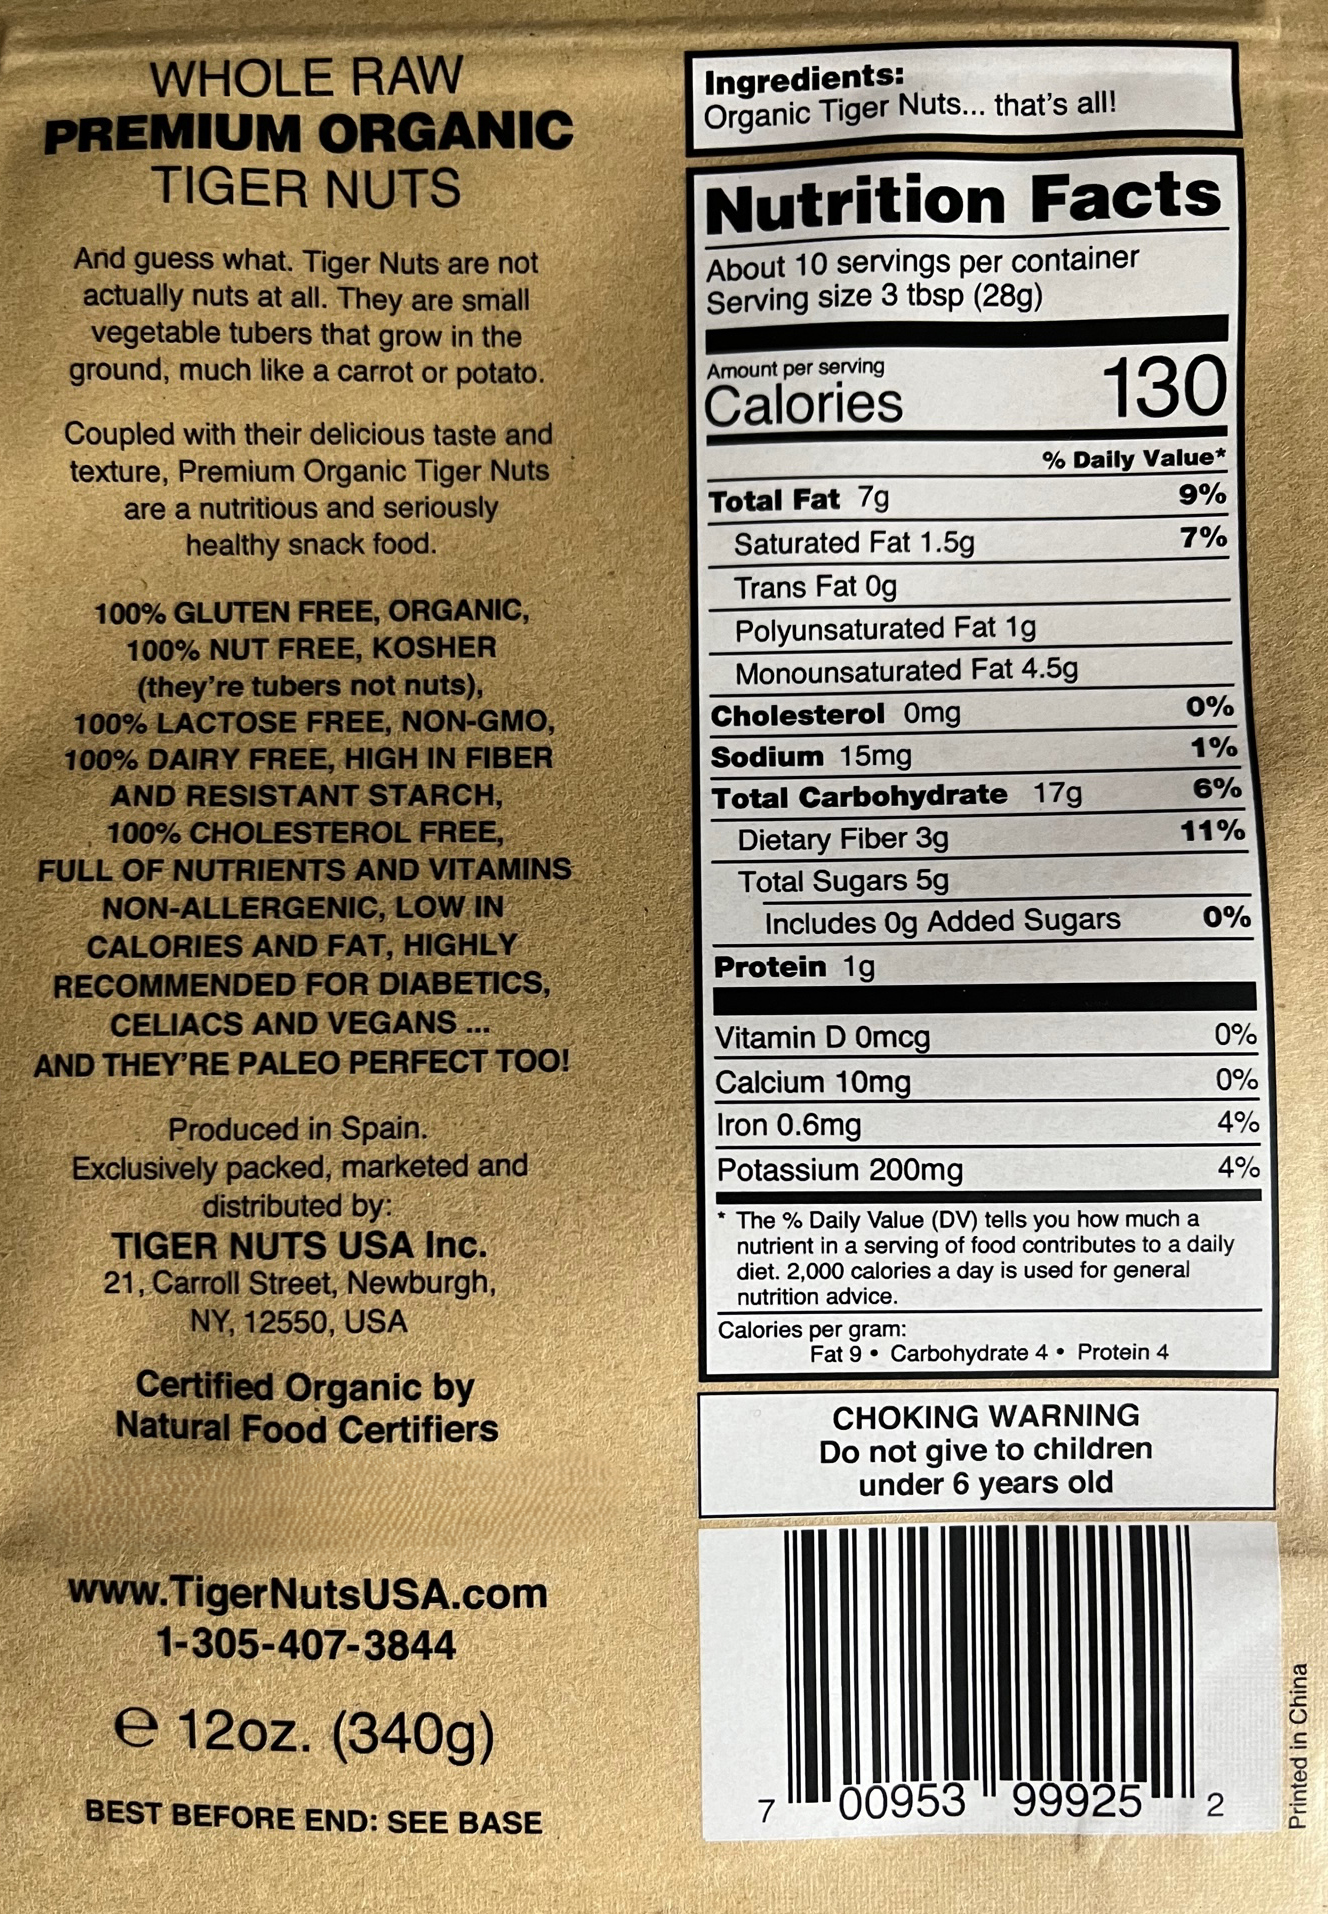 Raw Premium Organic Tiger Nuts in 12 oz bag